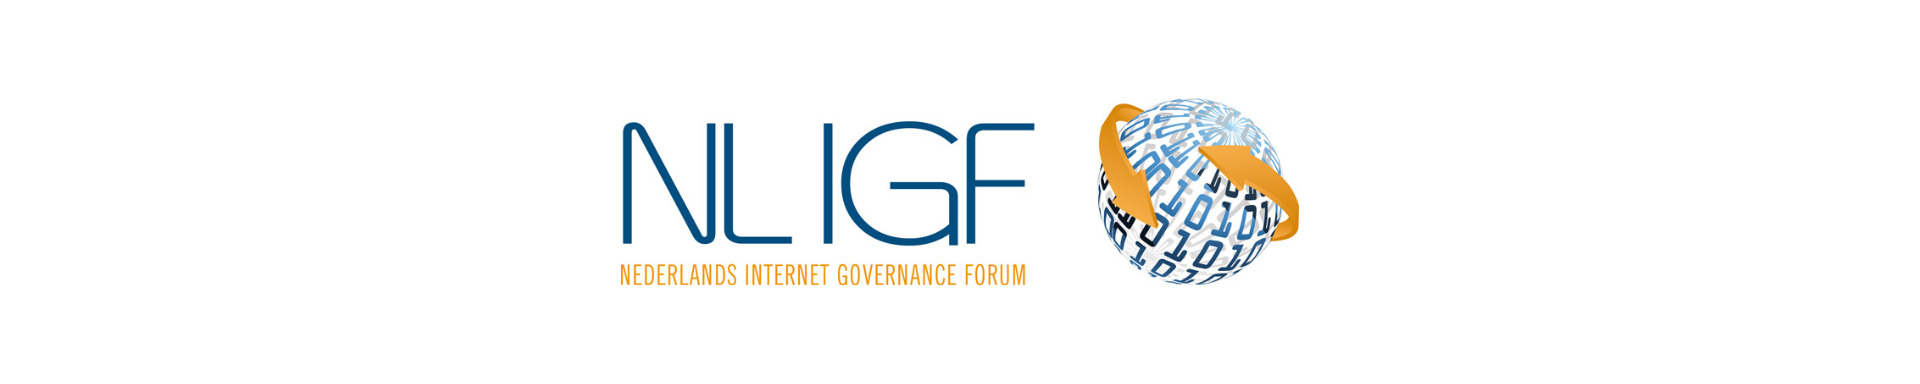 NLIGF event | Future-Proof Internet Governance